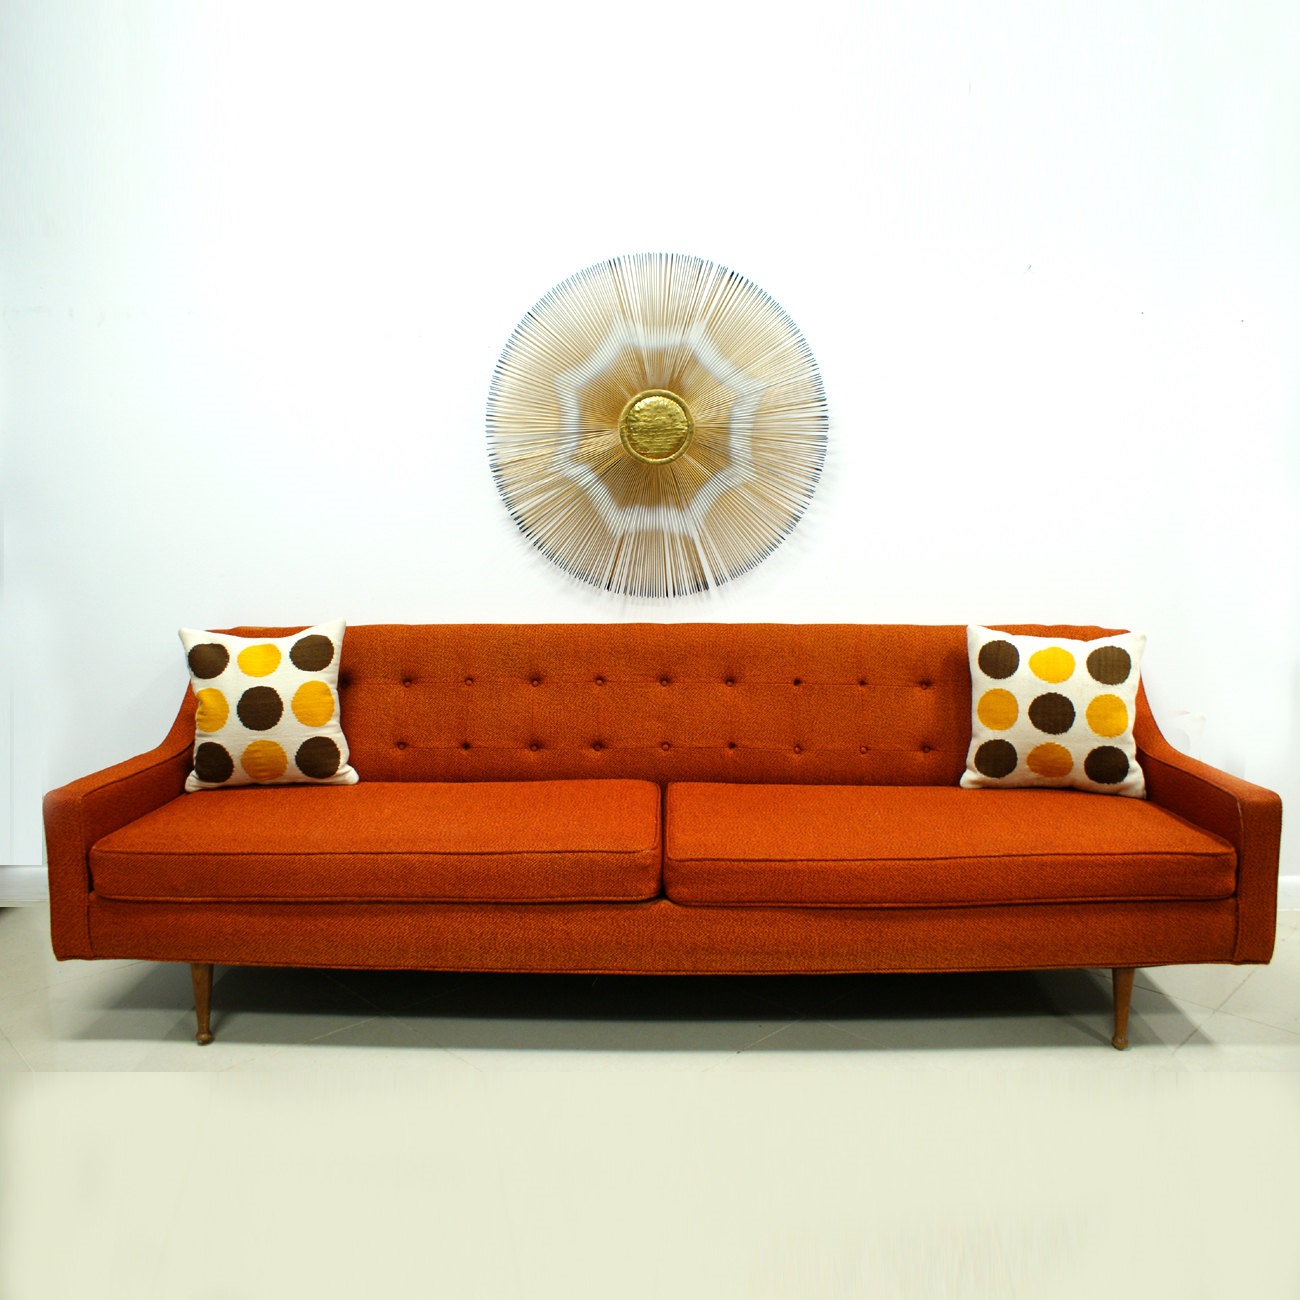 Unique Wall Modern Magnificent Unique Wall Decor Ideas Modern Minimalist Orange Sofa Splash Color Cushion With Polka Dot Cushion Furniture  Amazing Orange Sofa For Innovative House 